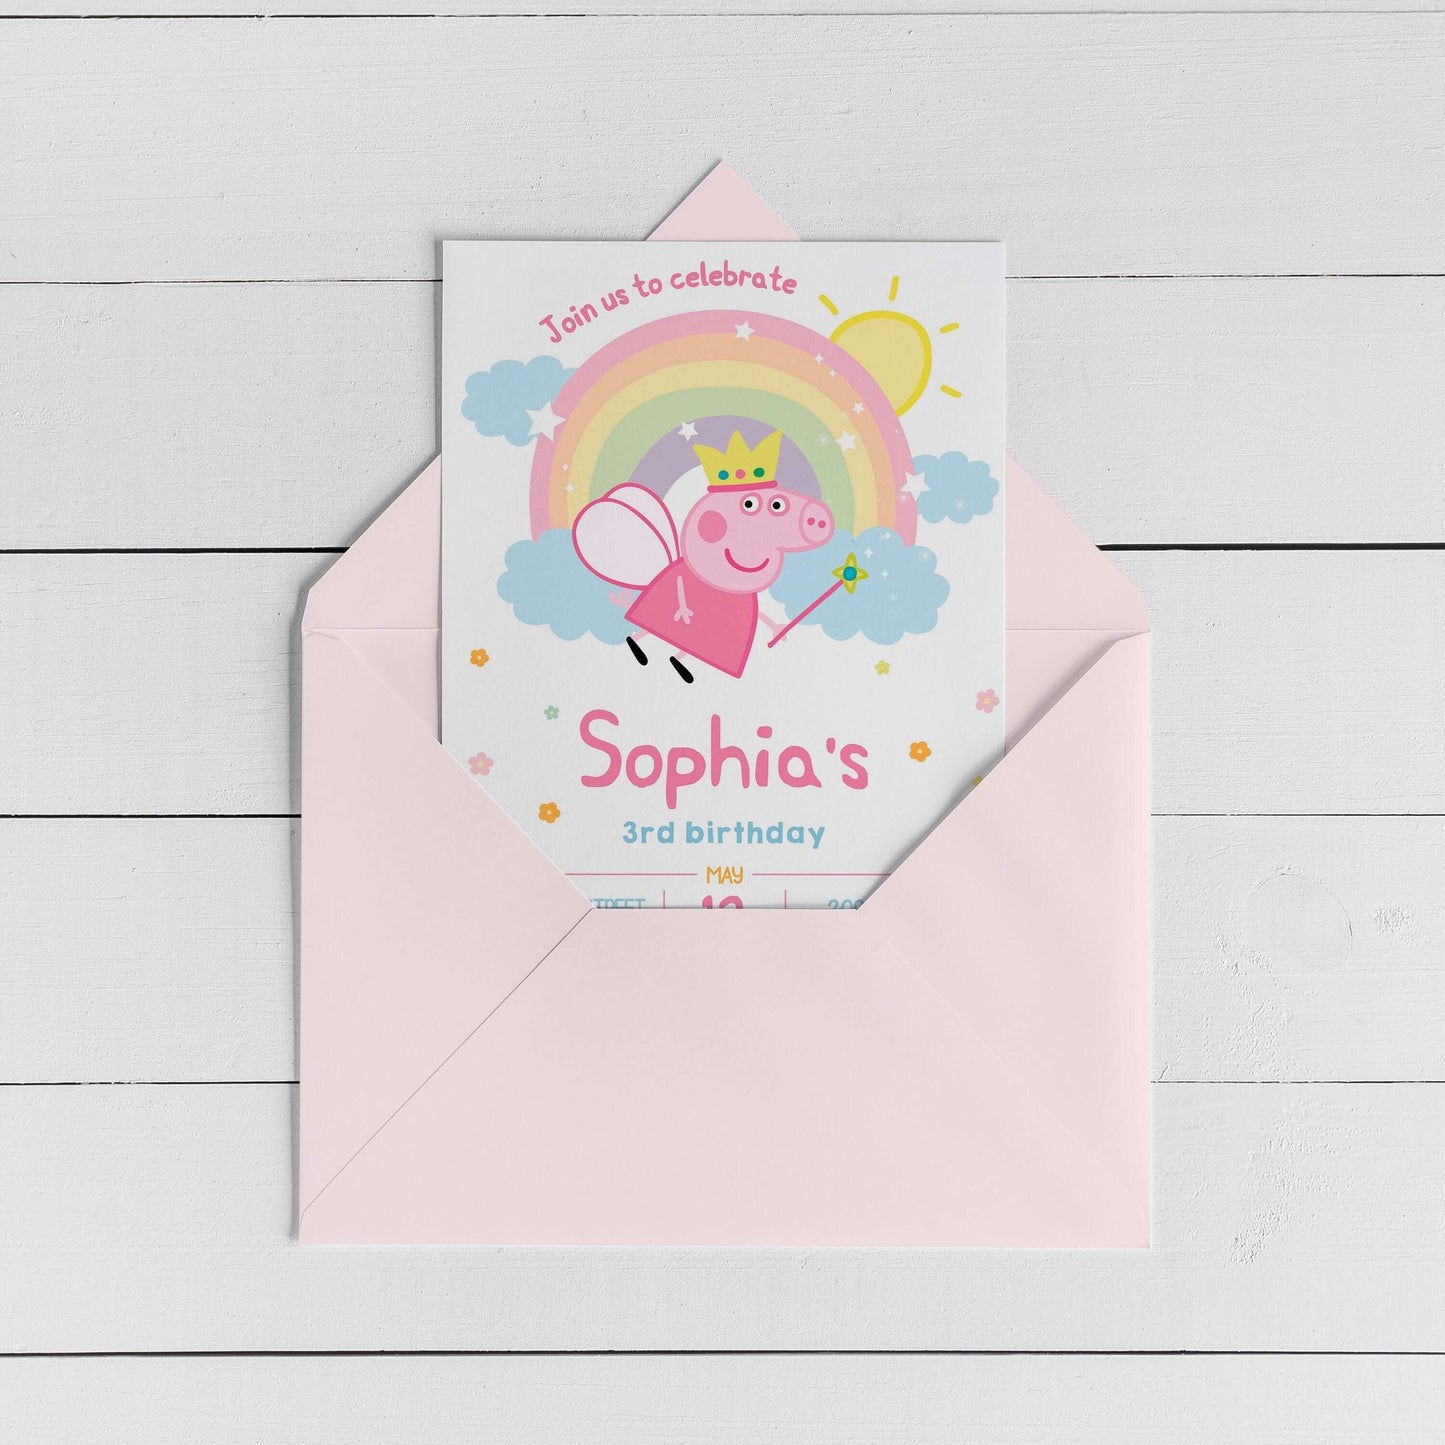 Fairy Peppa Pig Birthday Bundle ★ Instant Download | Editable Text - Digitally Printables